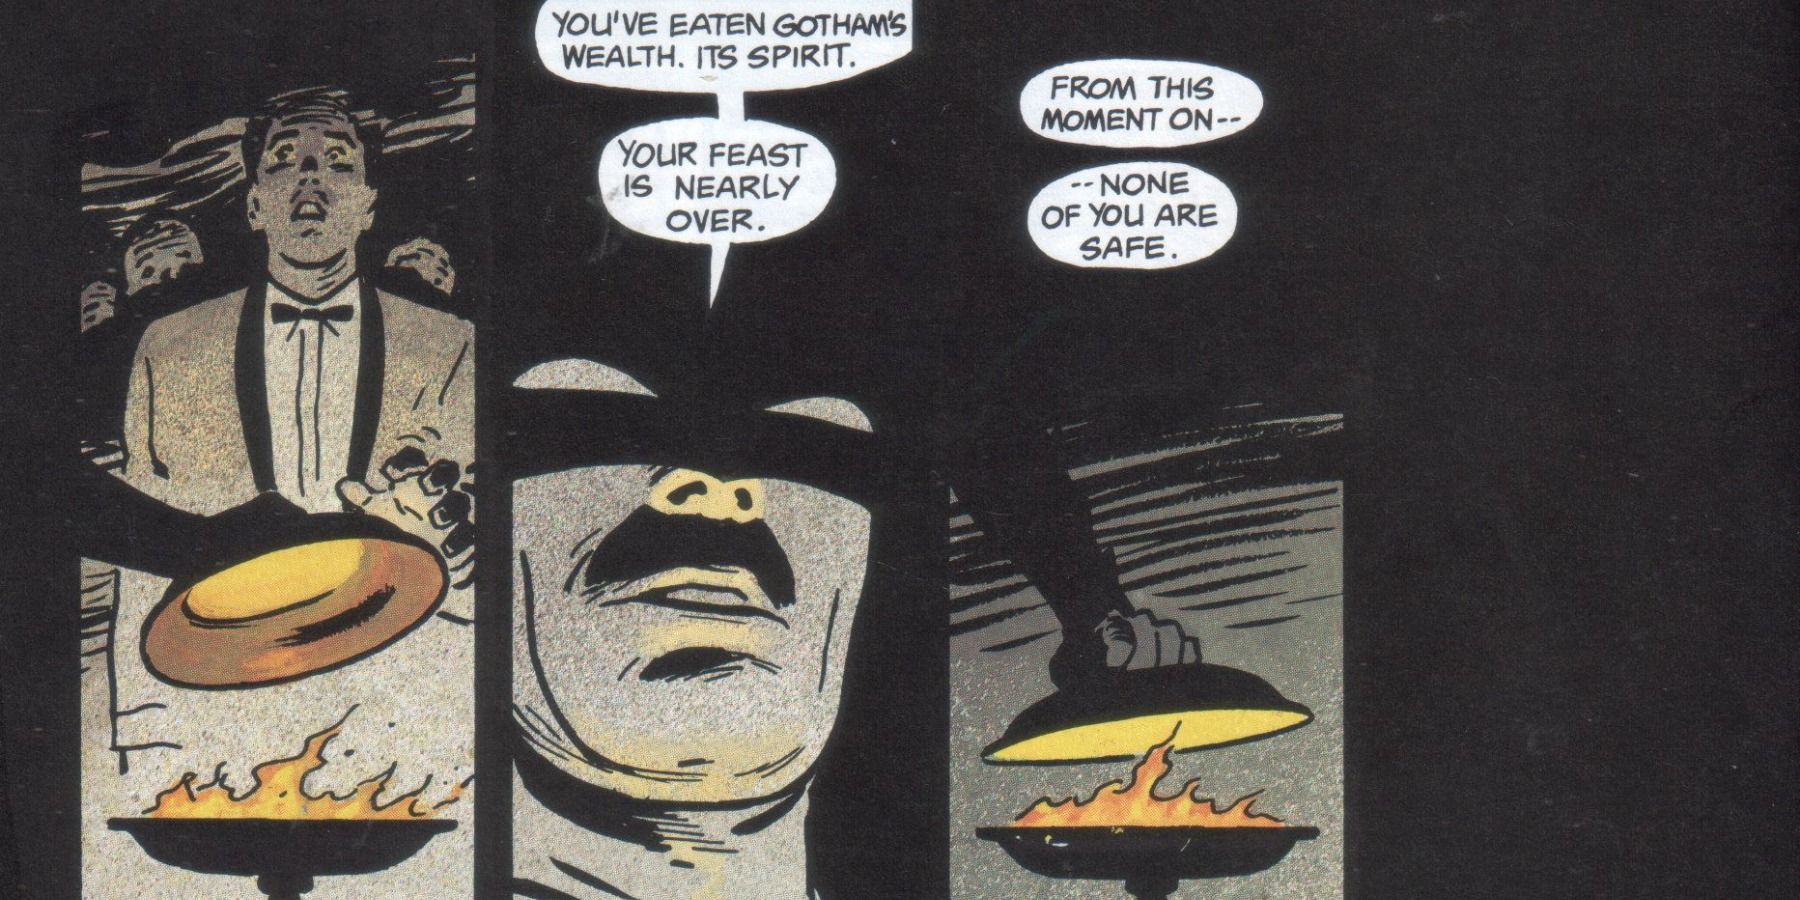 9 Ways Batman Year One Is The Best Comic Book Origin Story